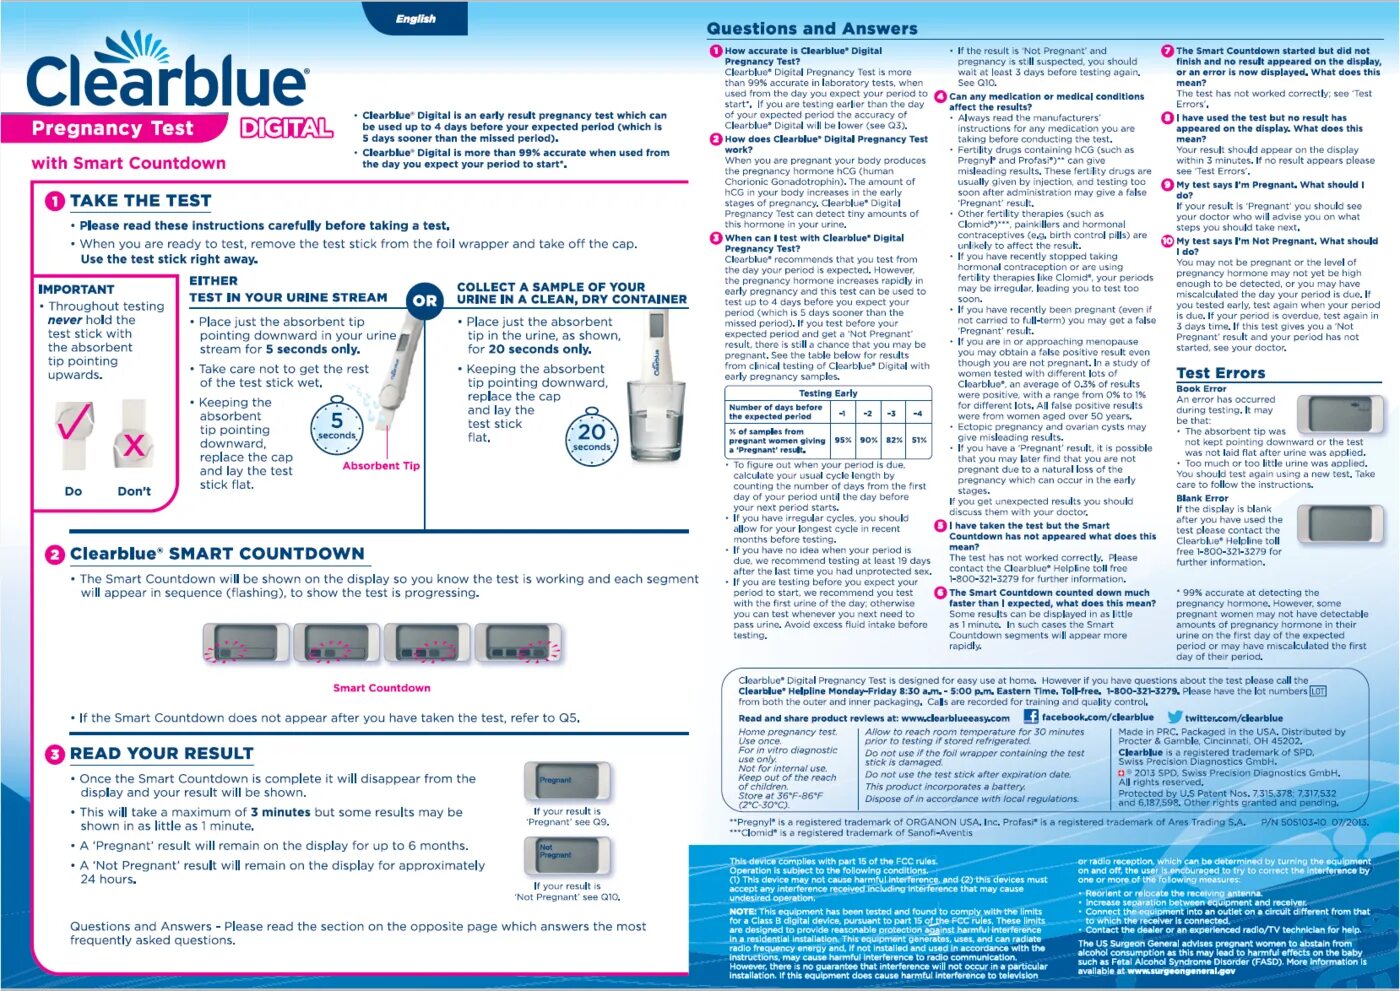 Цифровой тест на беременность Clearblue инструкция. Тест на беременность Clearblue инструкция. Инструкция к тесту на беременность Clearblue цифровой. Инструкция к цифровому тесту Clearblue.